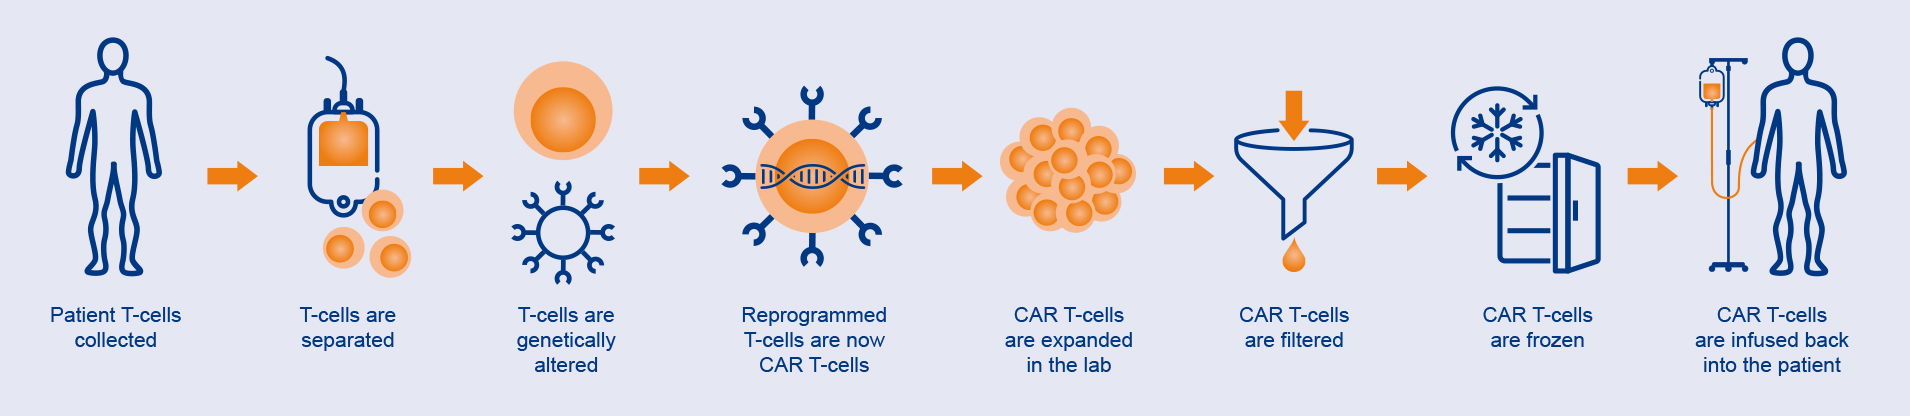 CAR T process diagram infographic